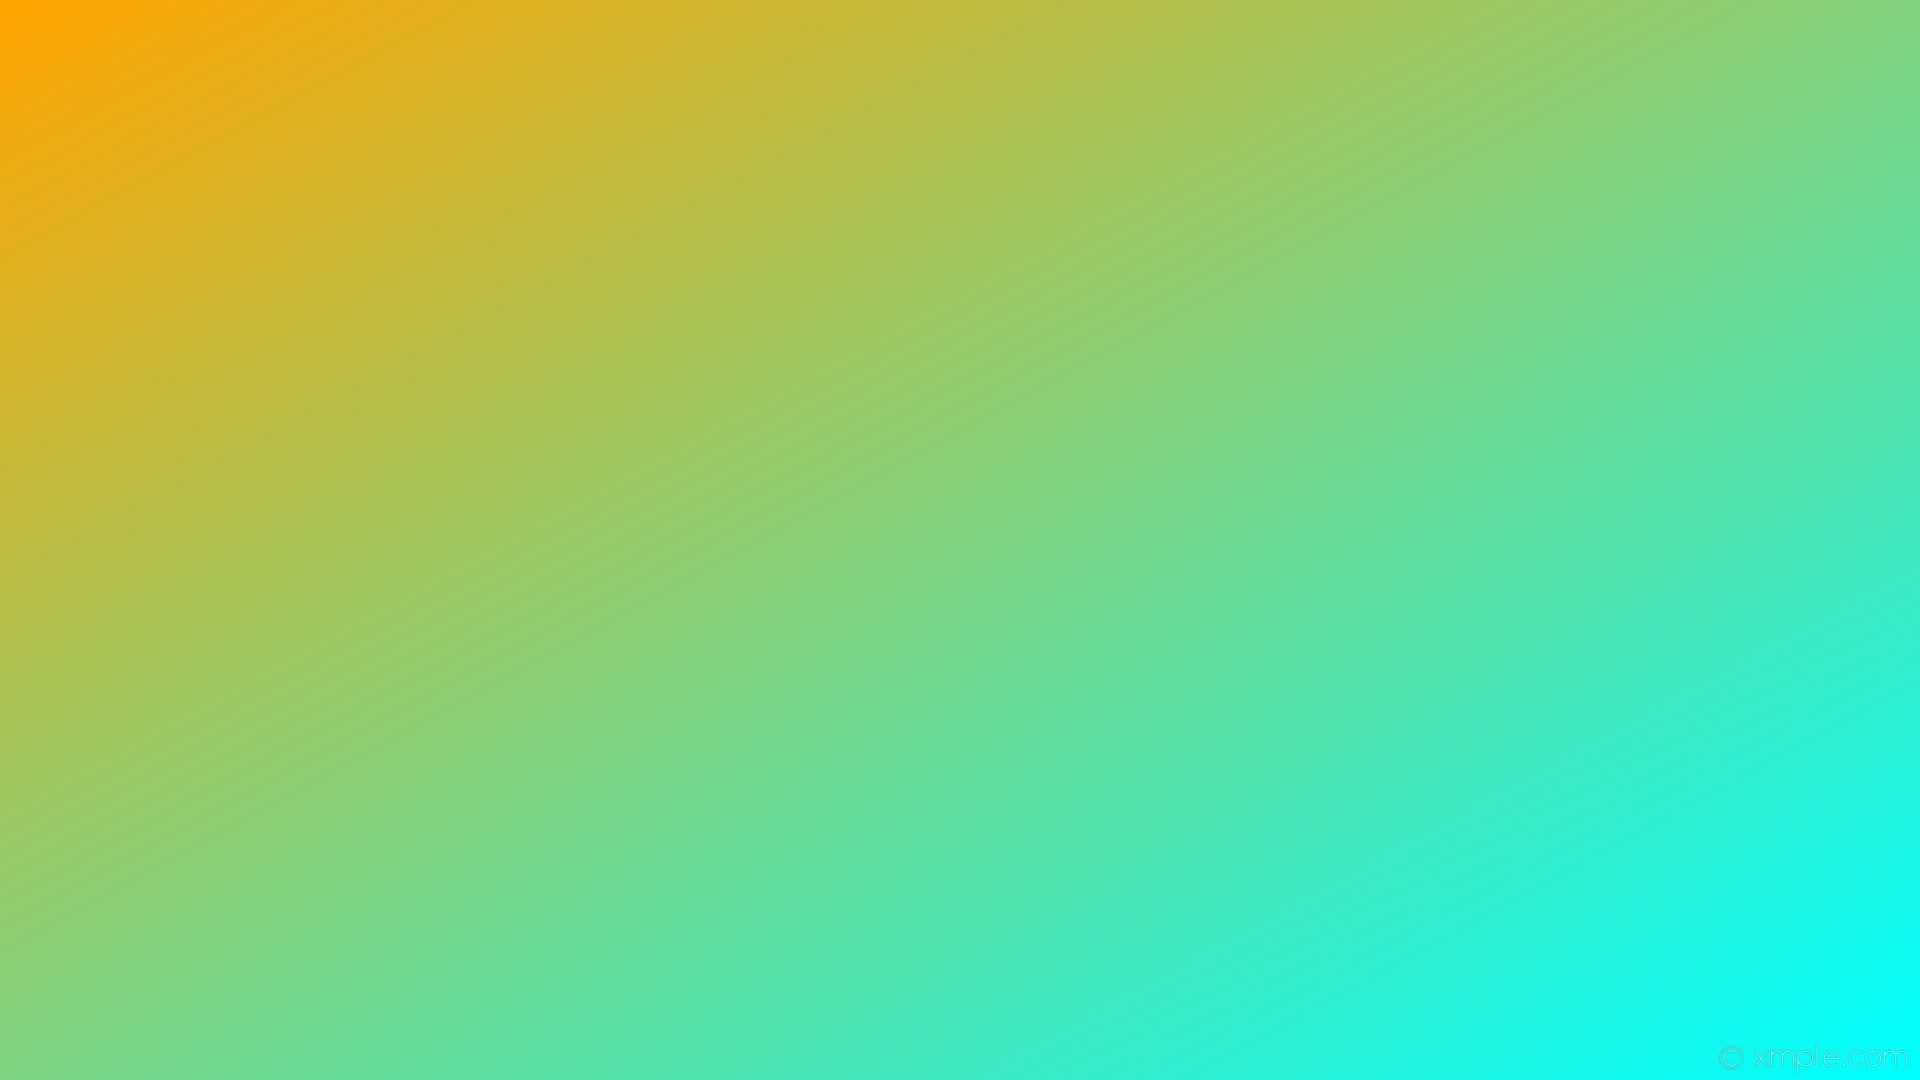 1920x1080 wallpaper gradient blue linear orange aqua cyan #ffa500 #00ffff 150Â°